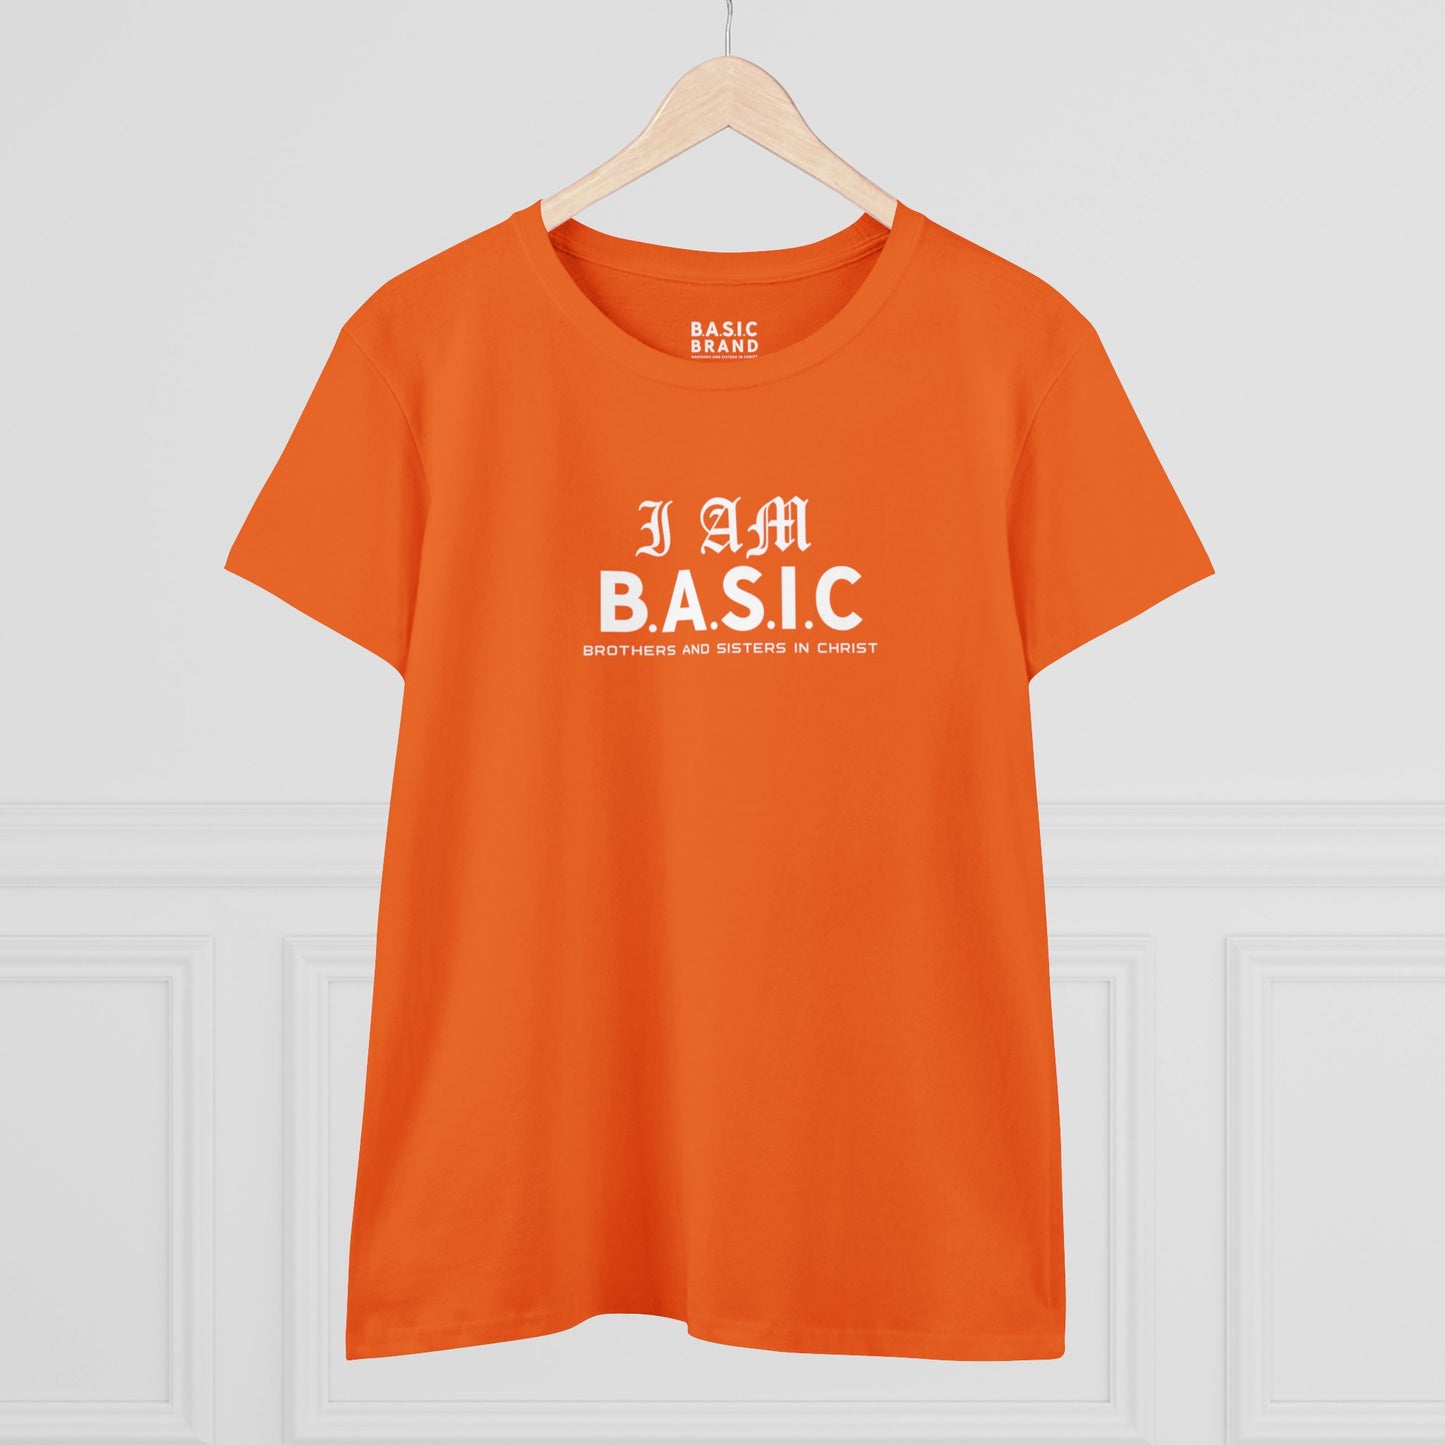 Women's B.A.S.I.C "I AM White Font" Tee Shirt